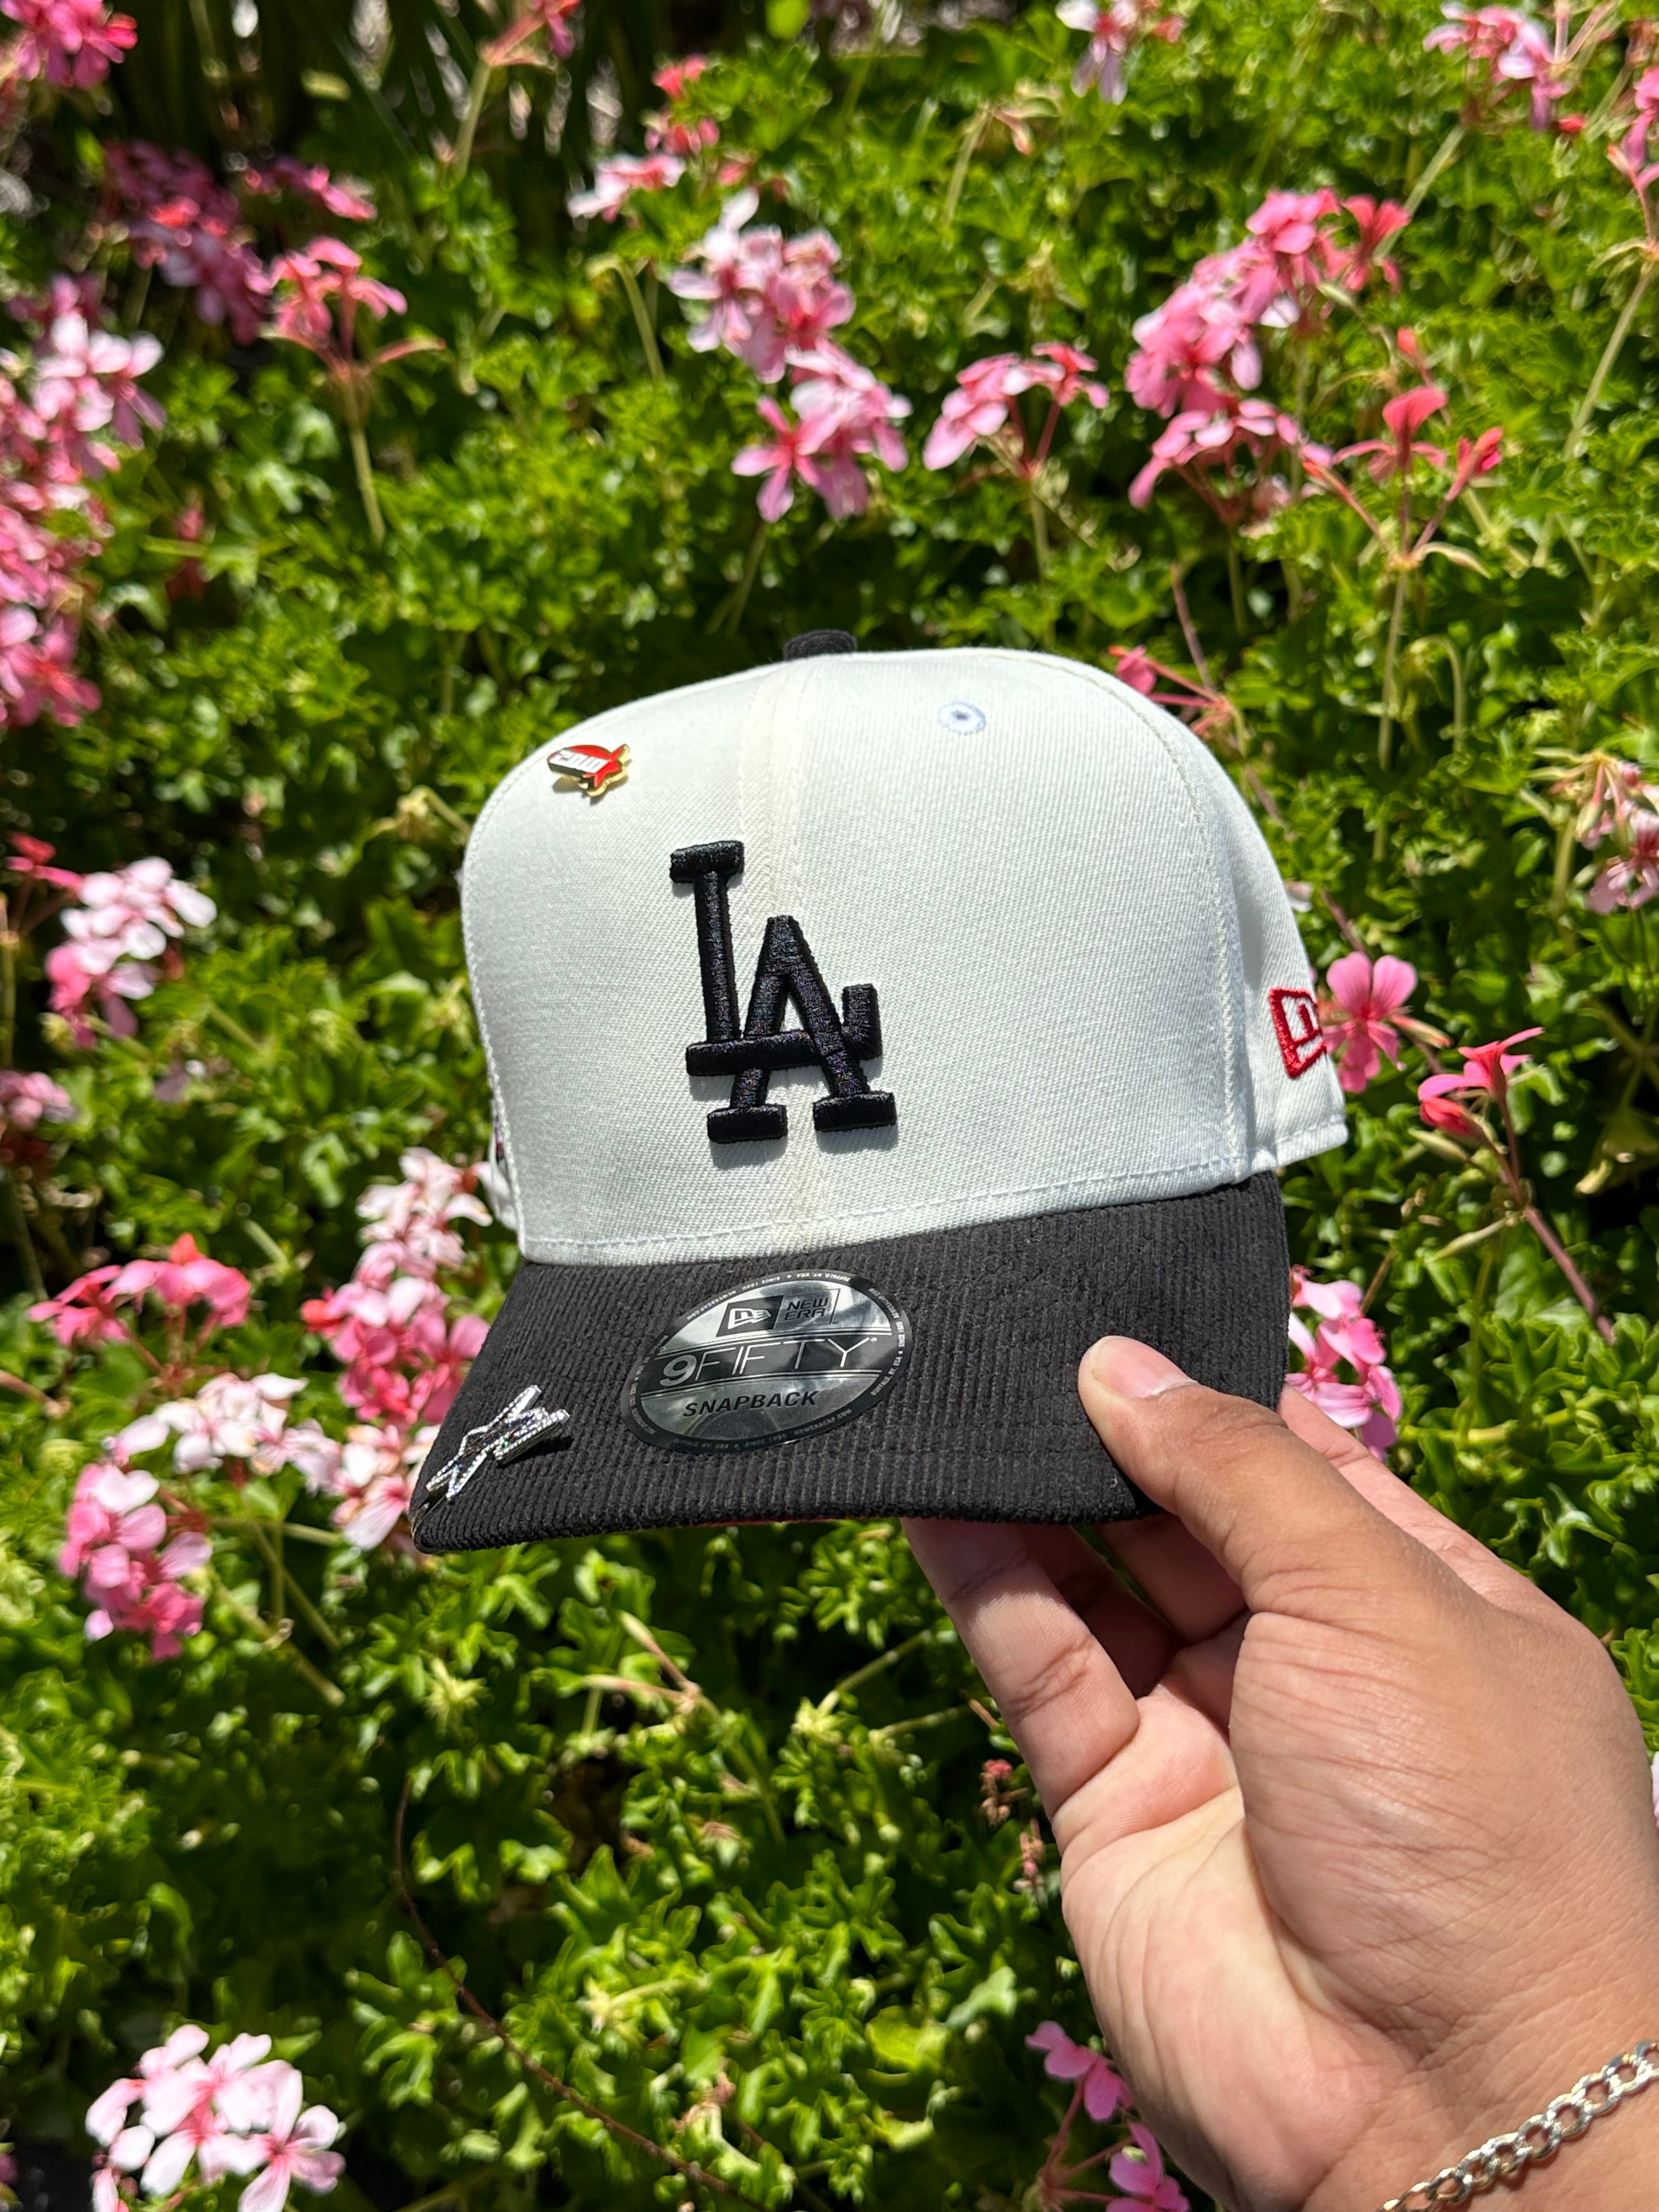 New Era 9FIFTY Los Angeles Dodgers Trucker Snapback Hat Black White